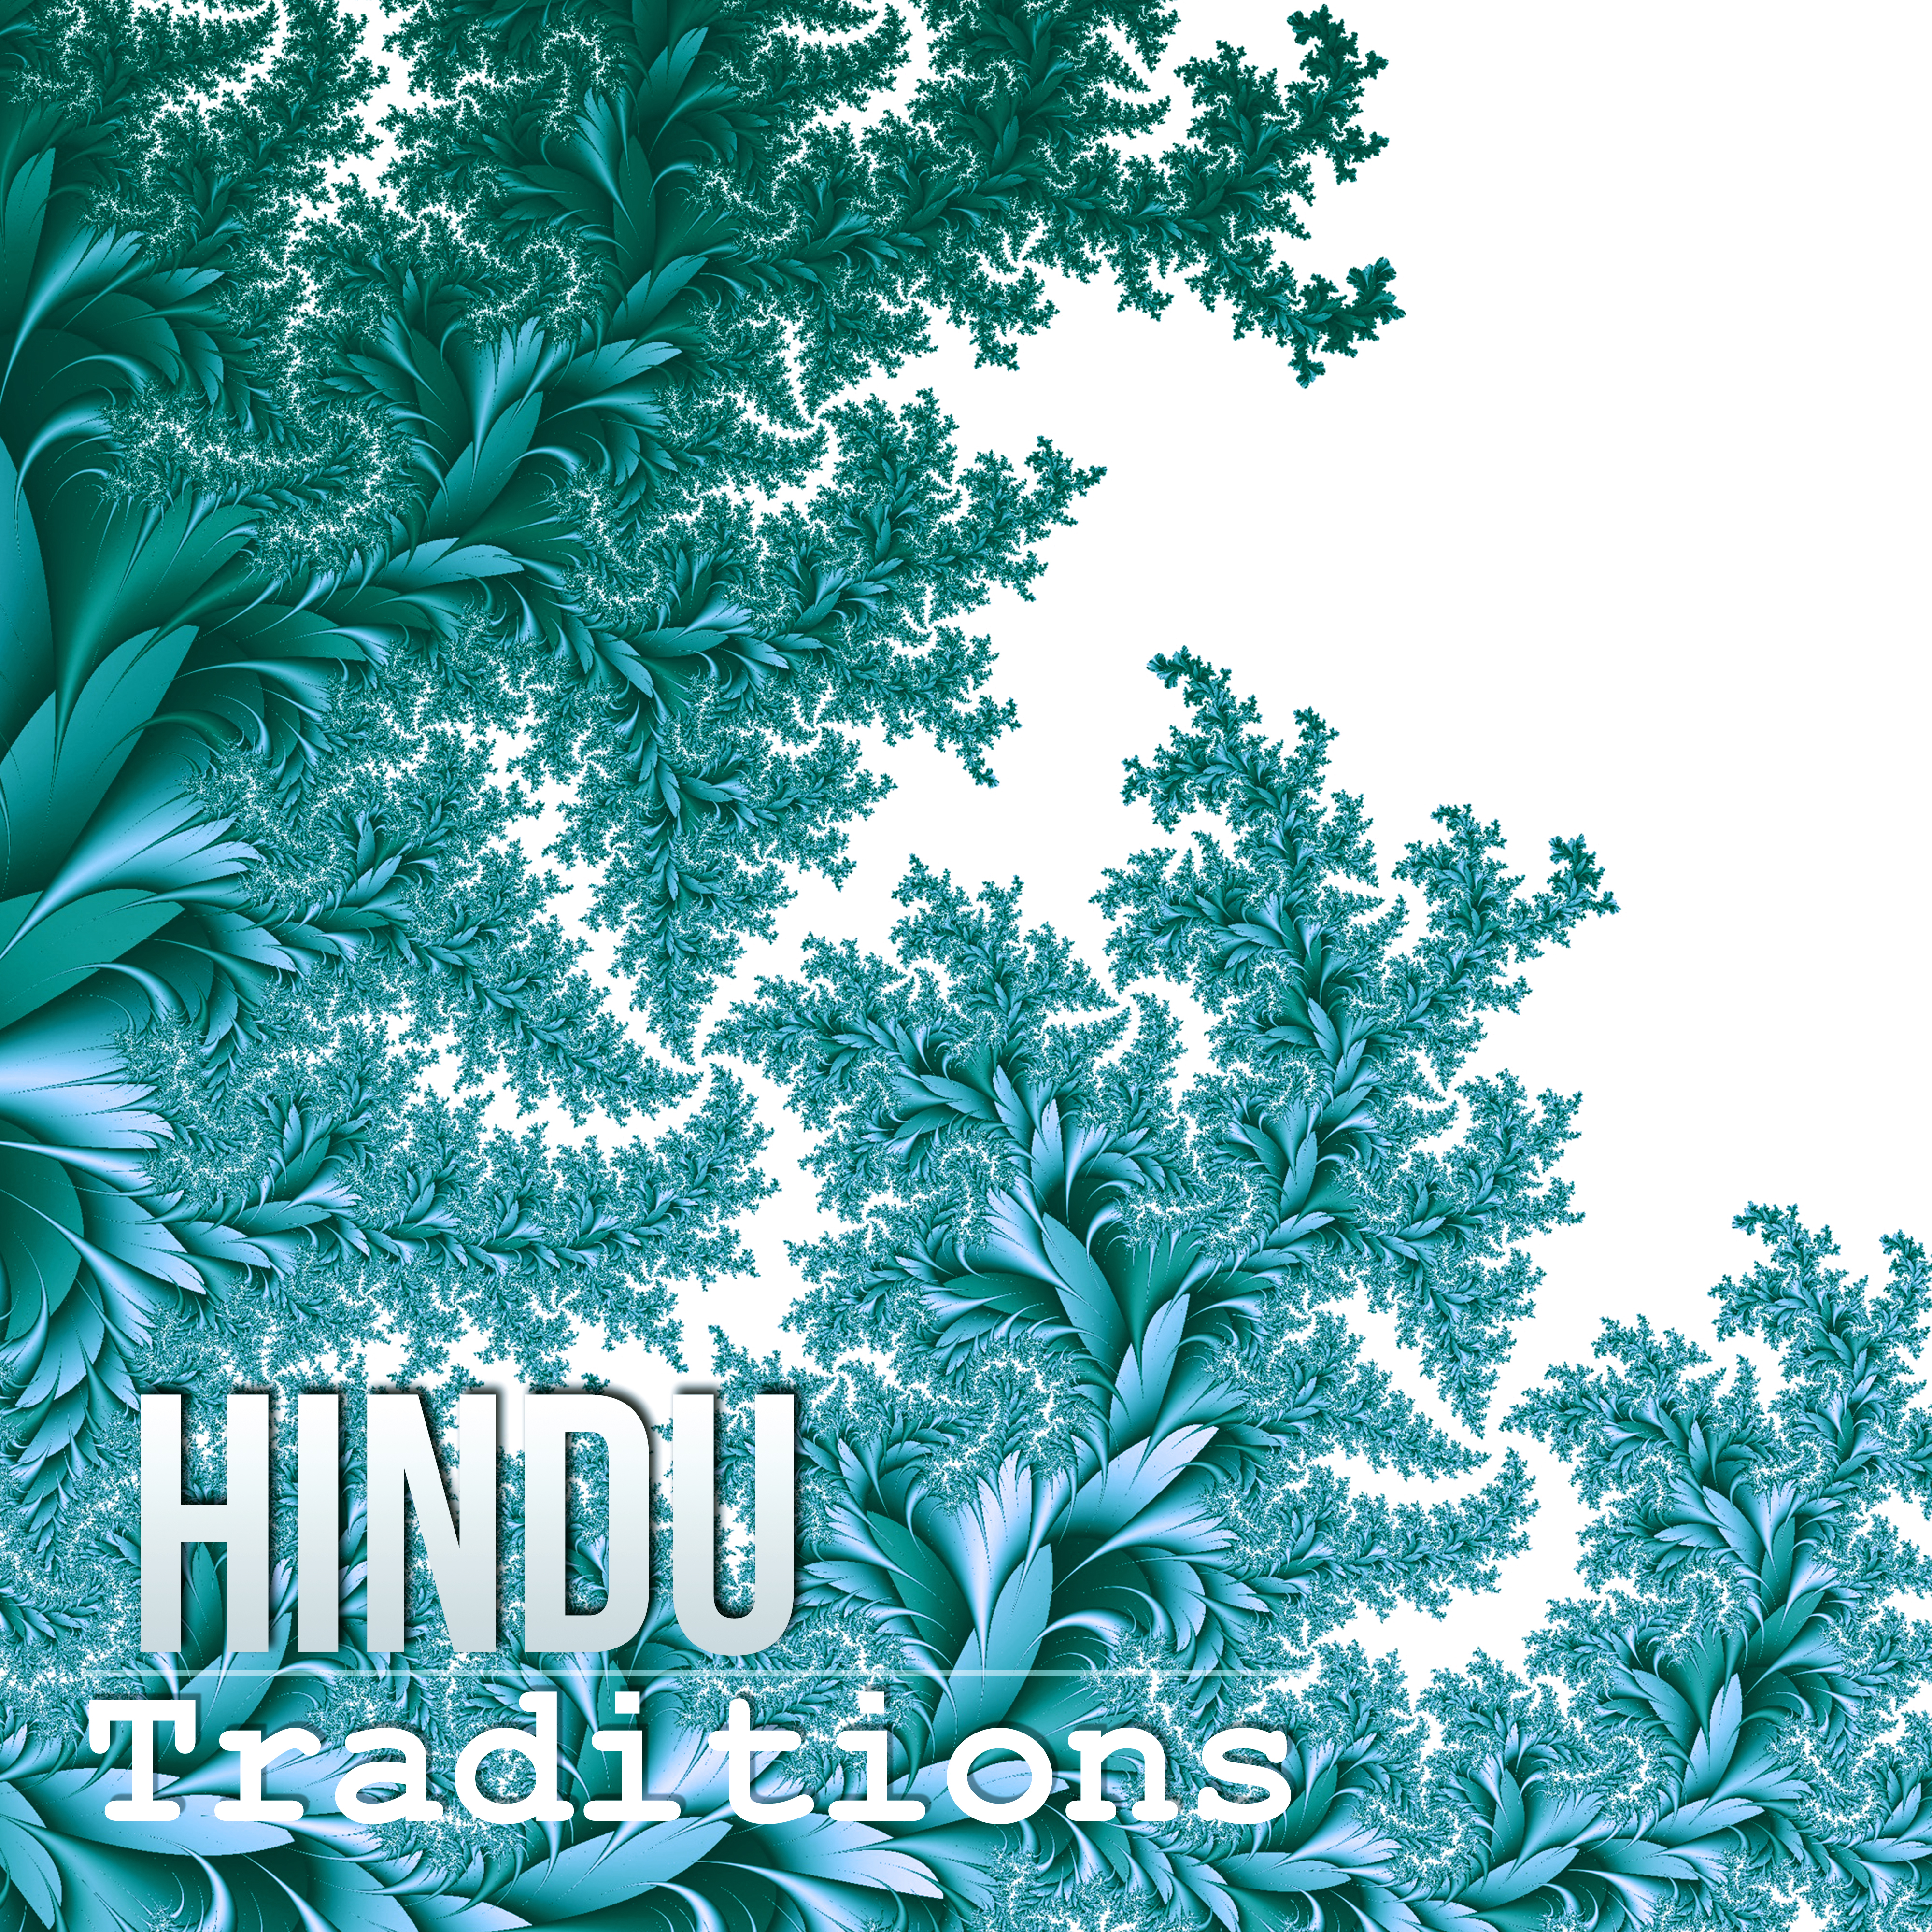 Hindu Traditions